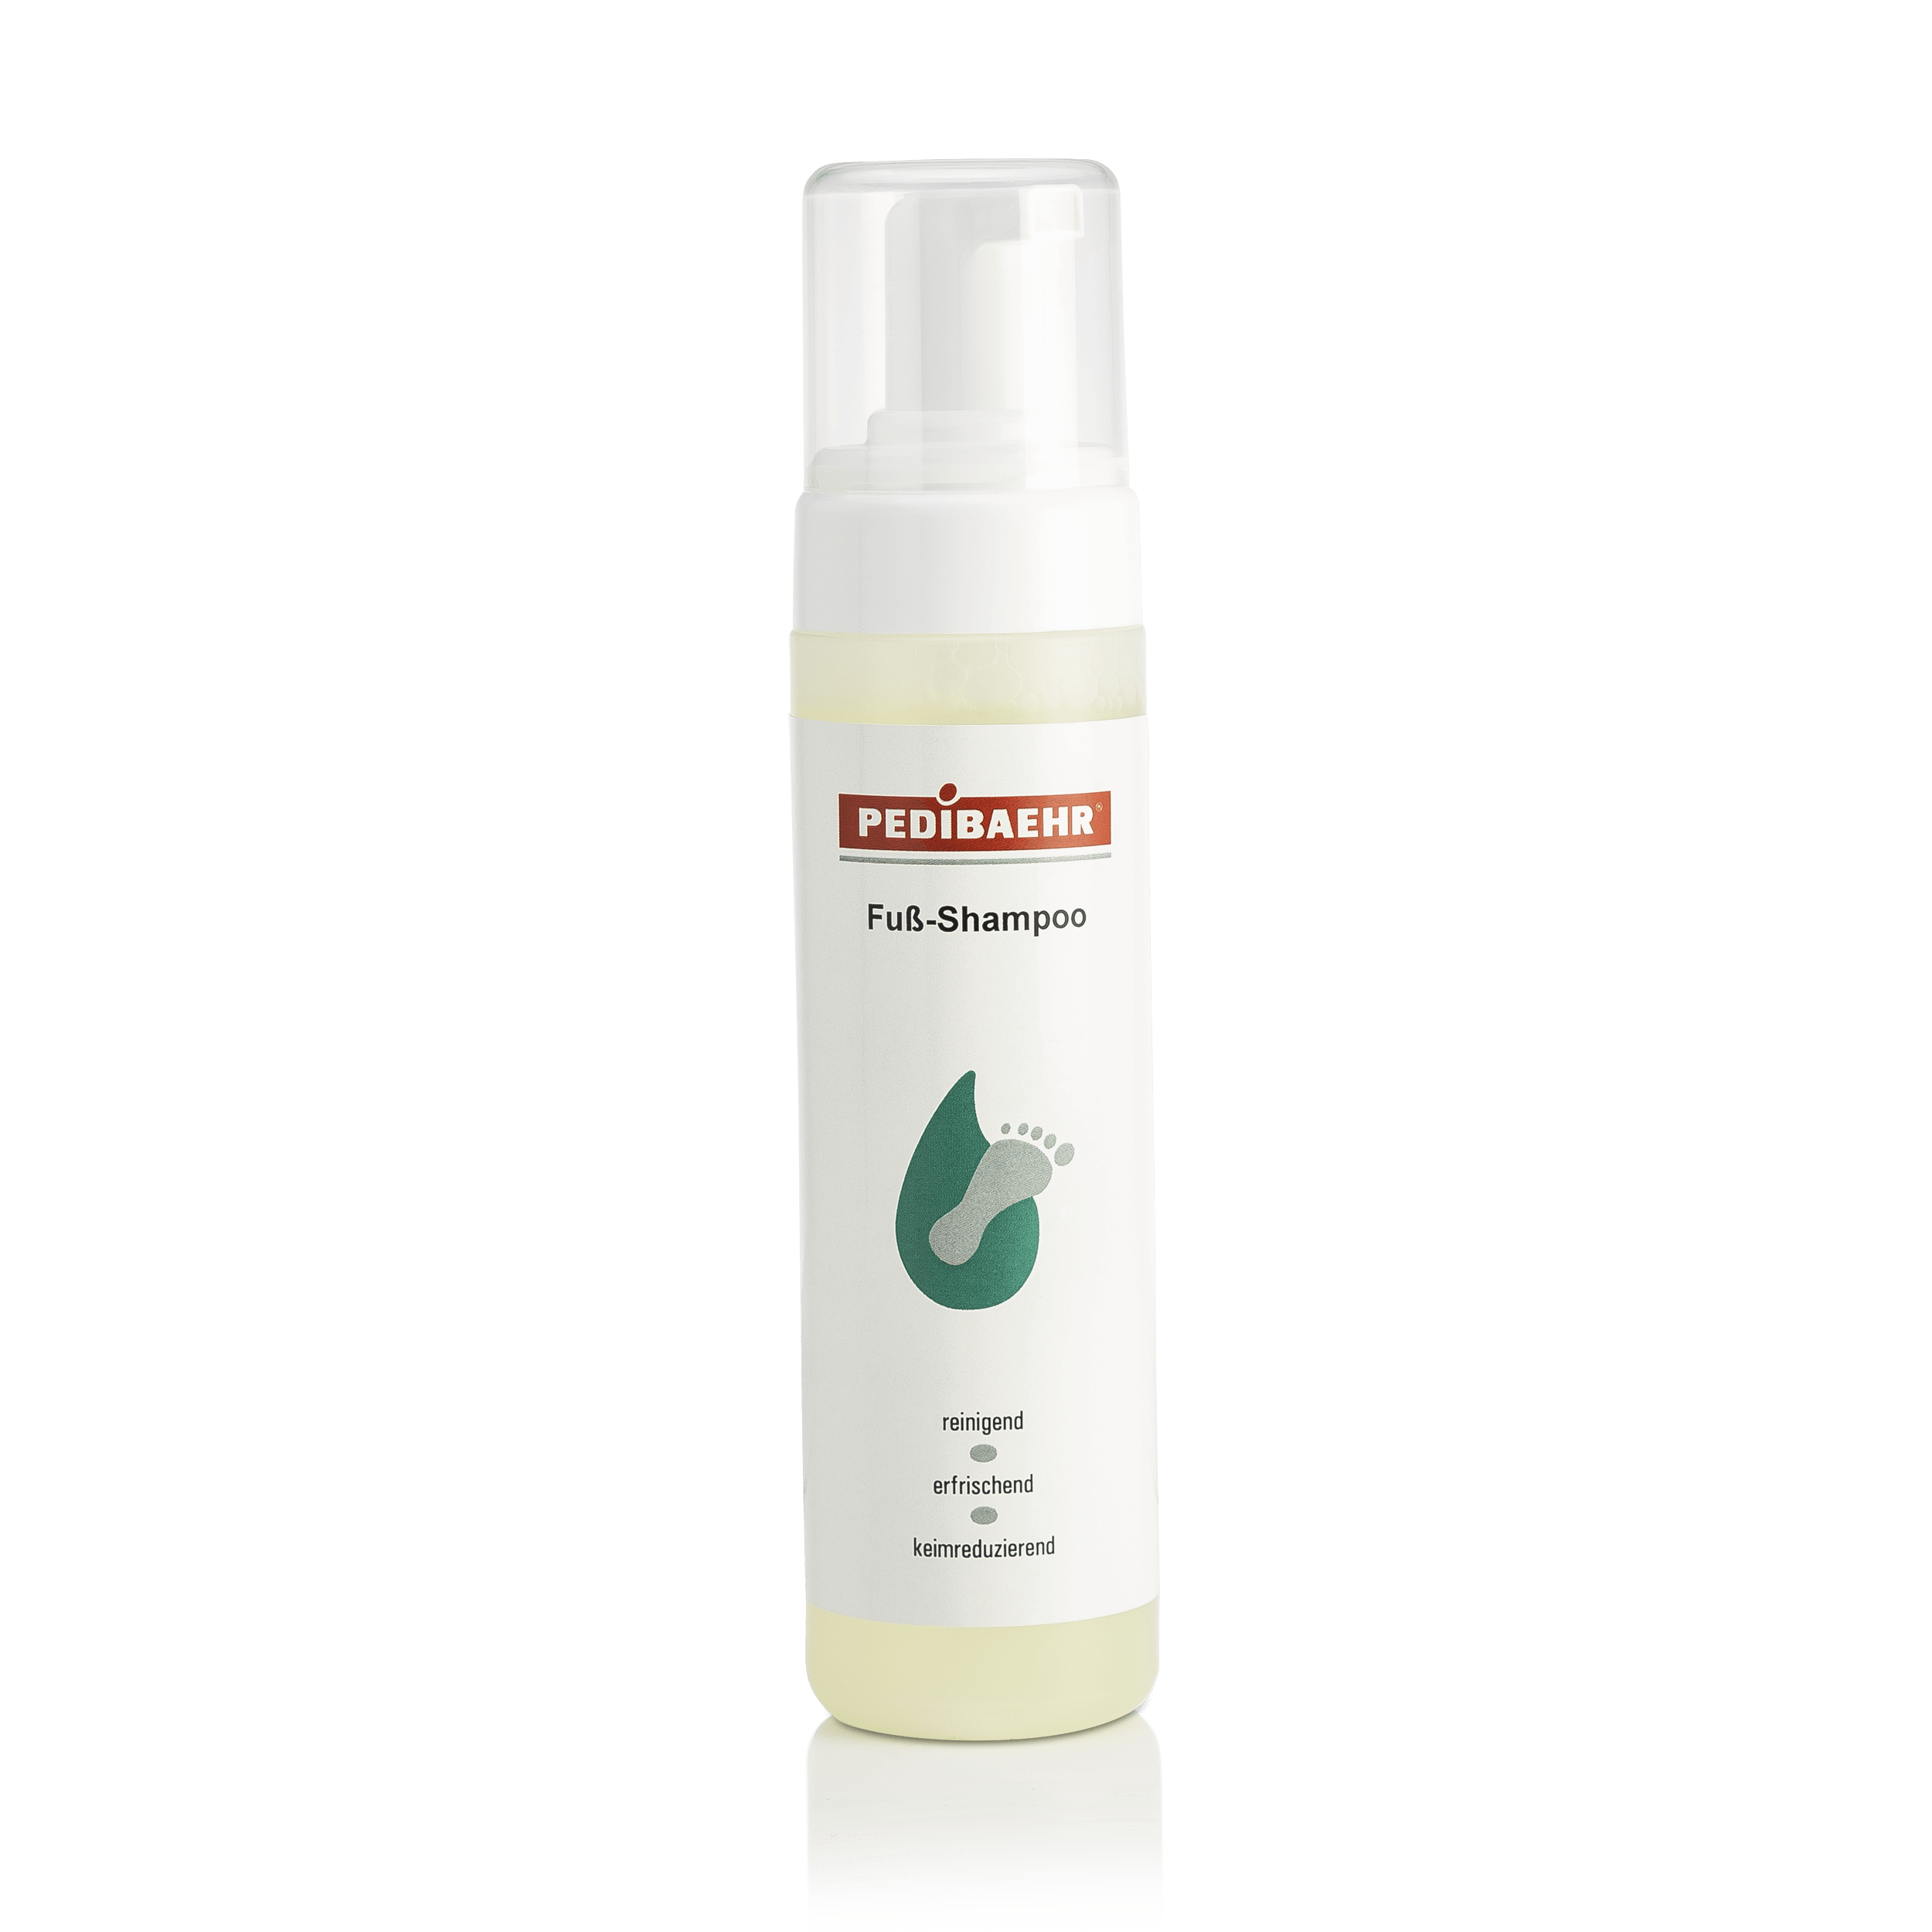 PEDIBAEHR Fuß-Shampoo mit Eukalyptus/Zitronengras 200 ml